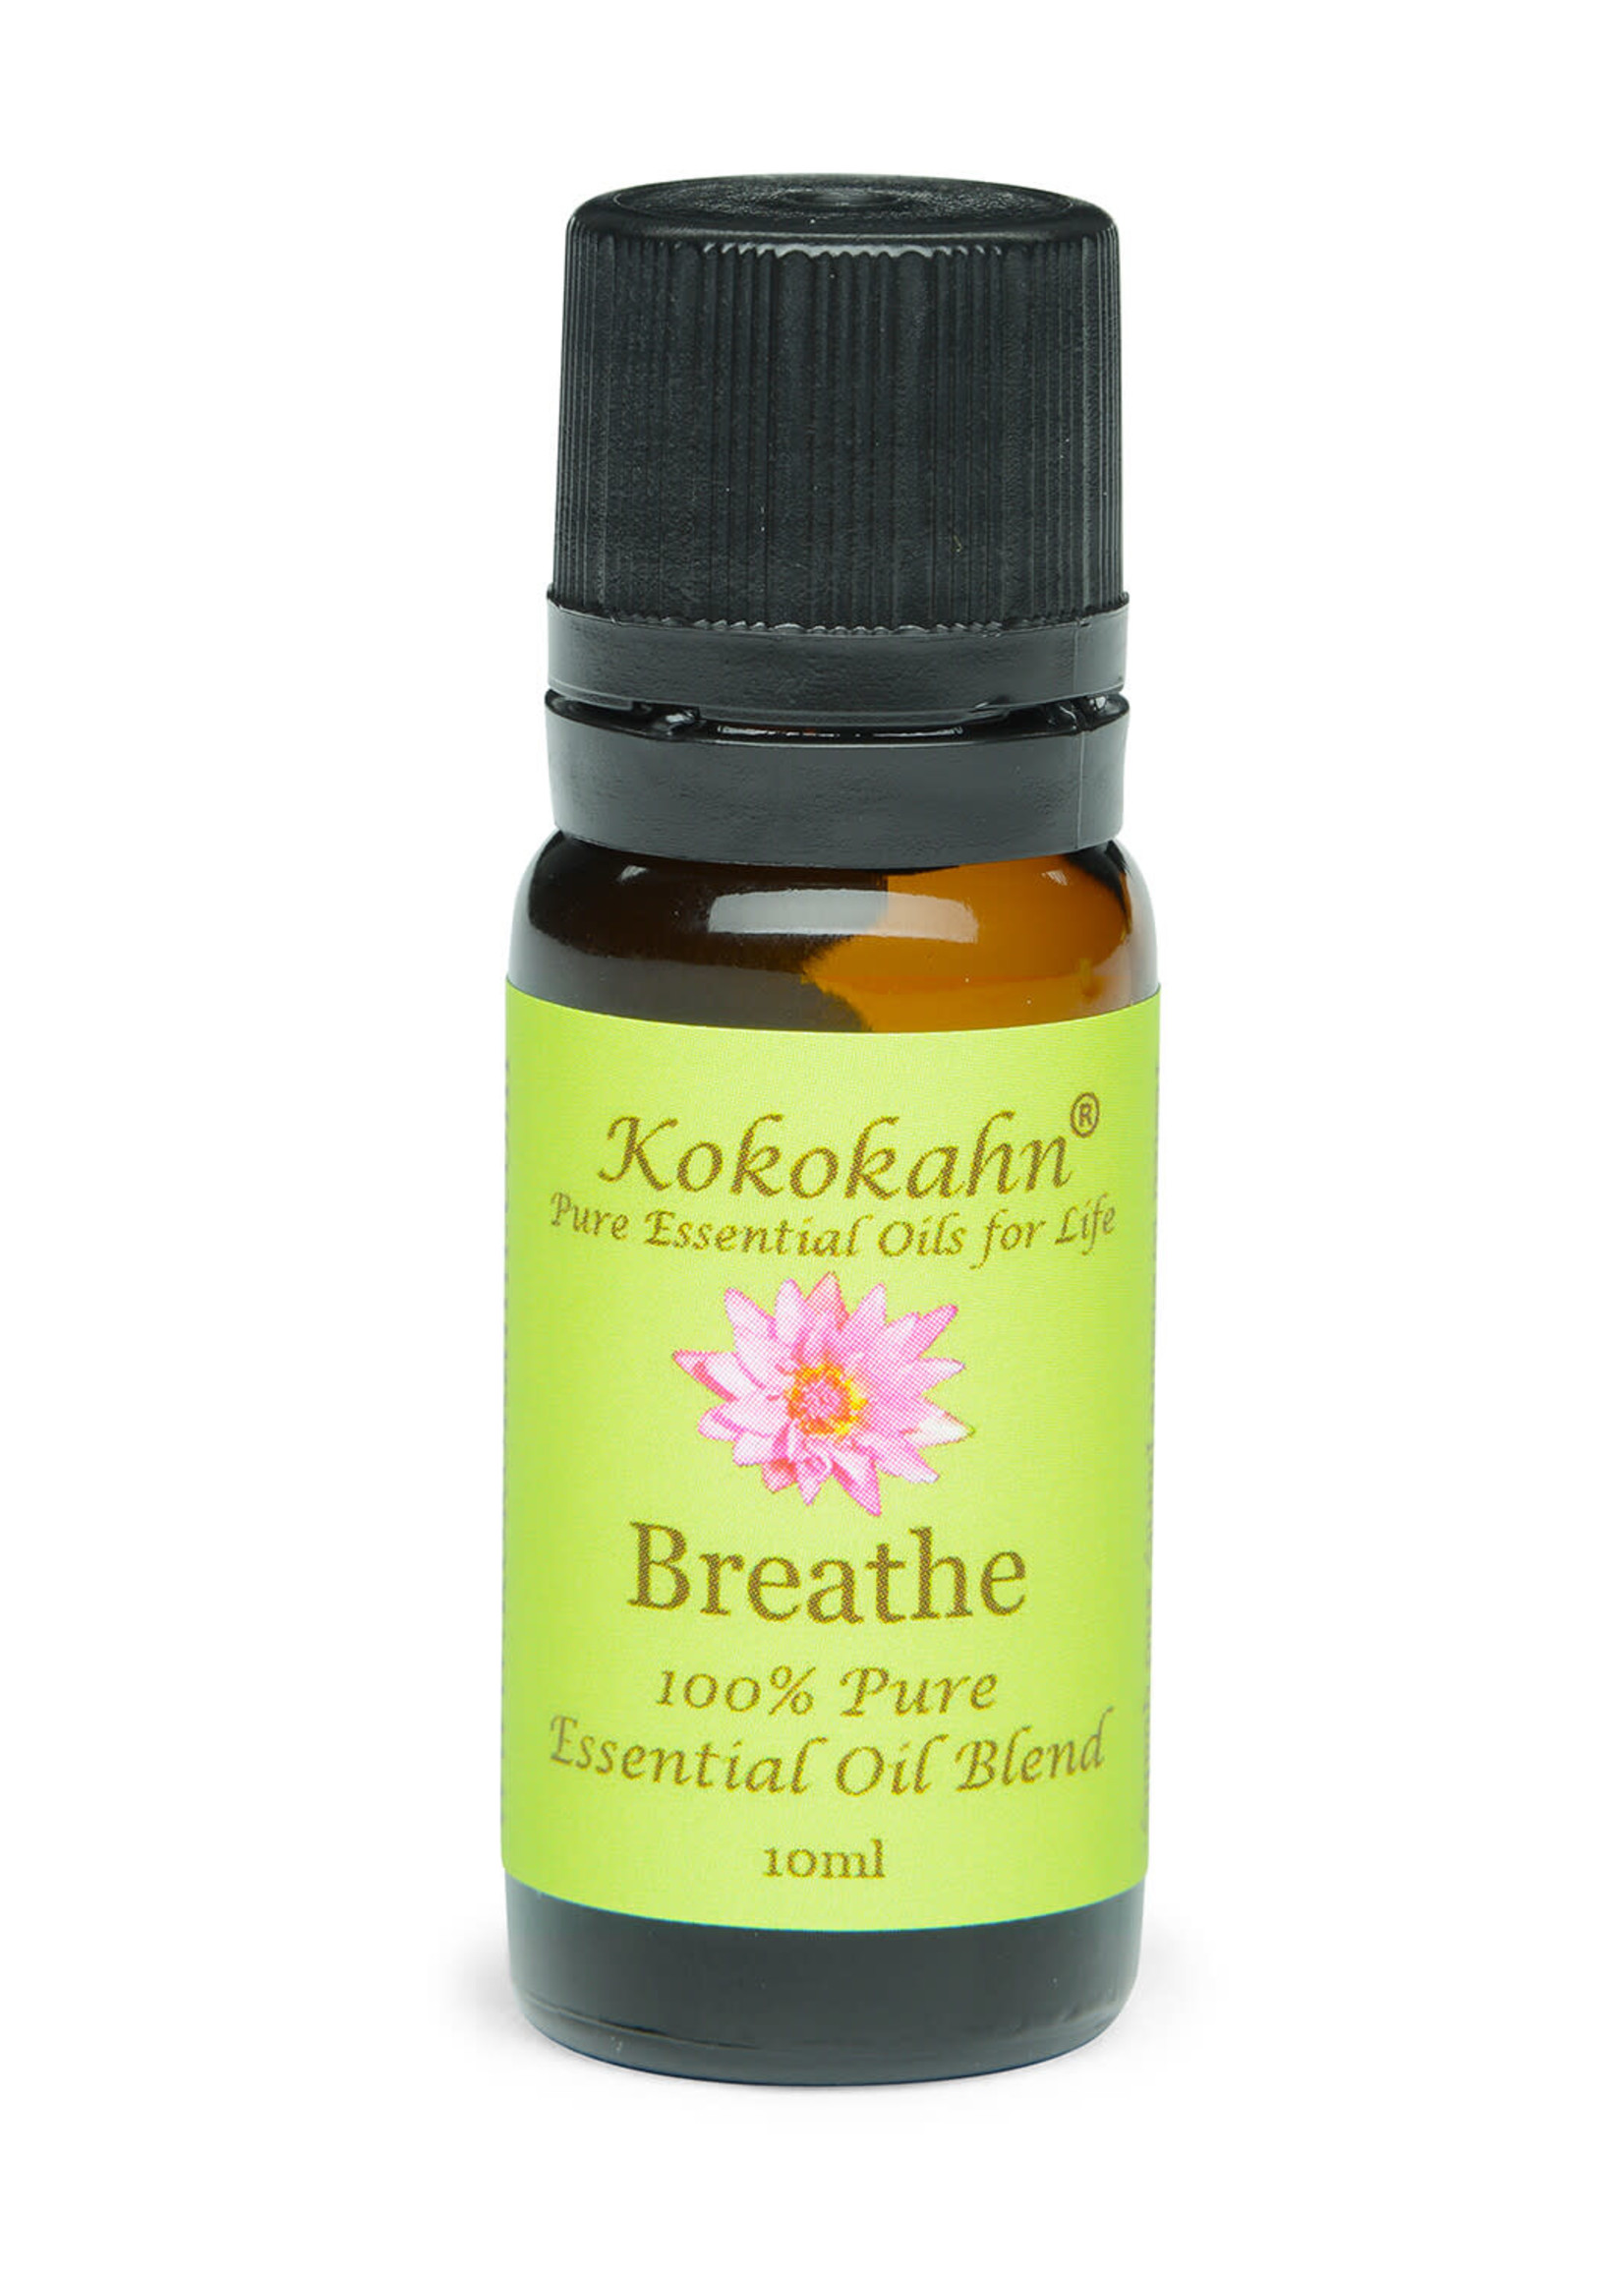 Kokokahn Breathe Essential Oil Blend